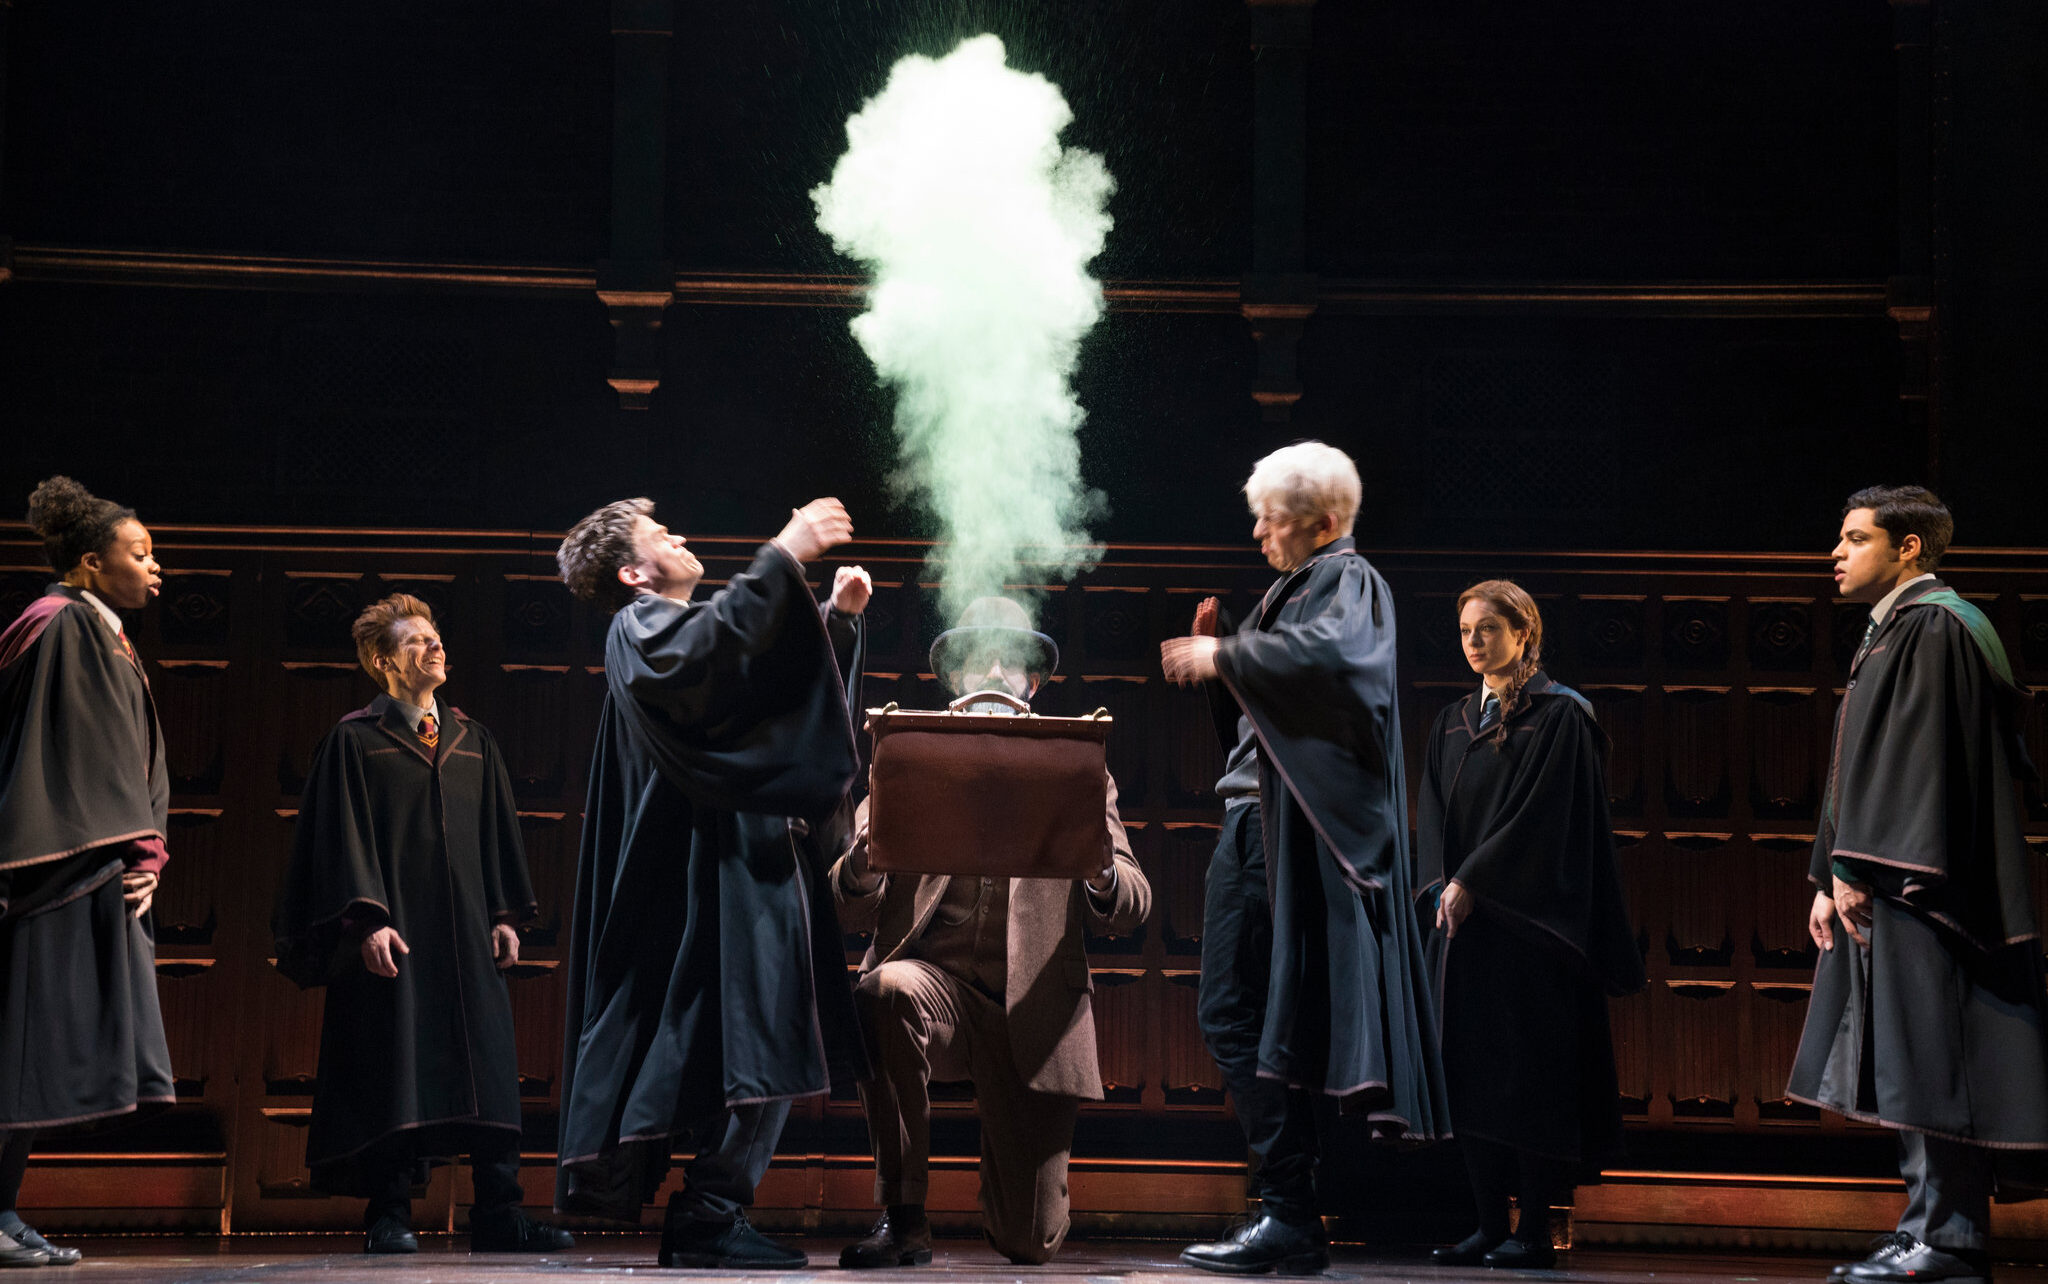 hogwarts students surrounding smoke